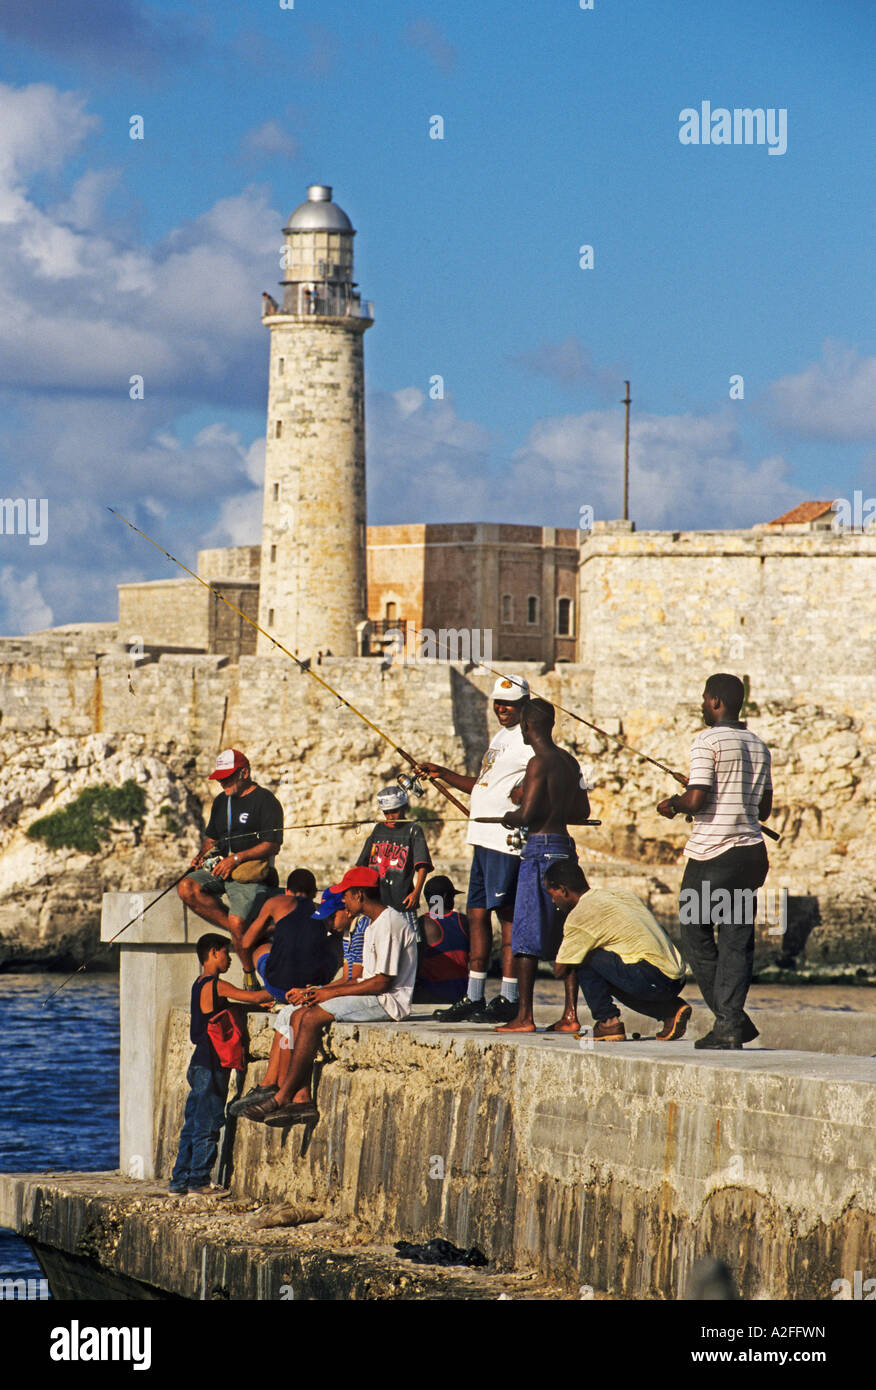 Angler an der Uferpromenade Malecon, Festung El Morro im Hintergrund, Havanna, Kuba Stockfoto